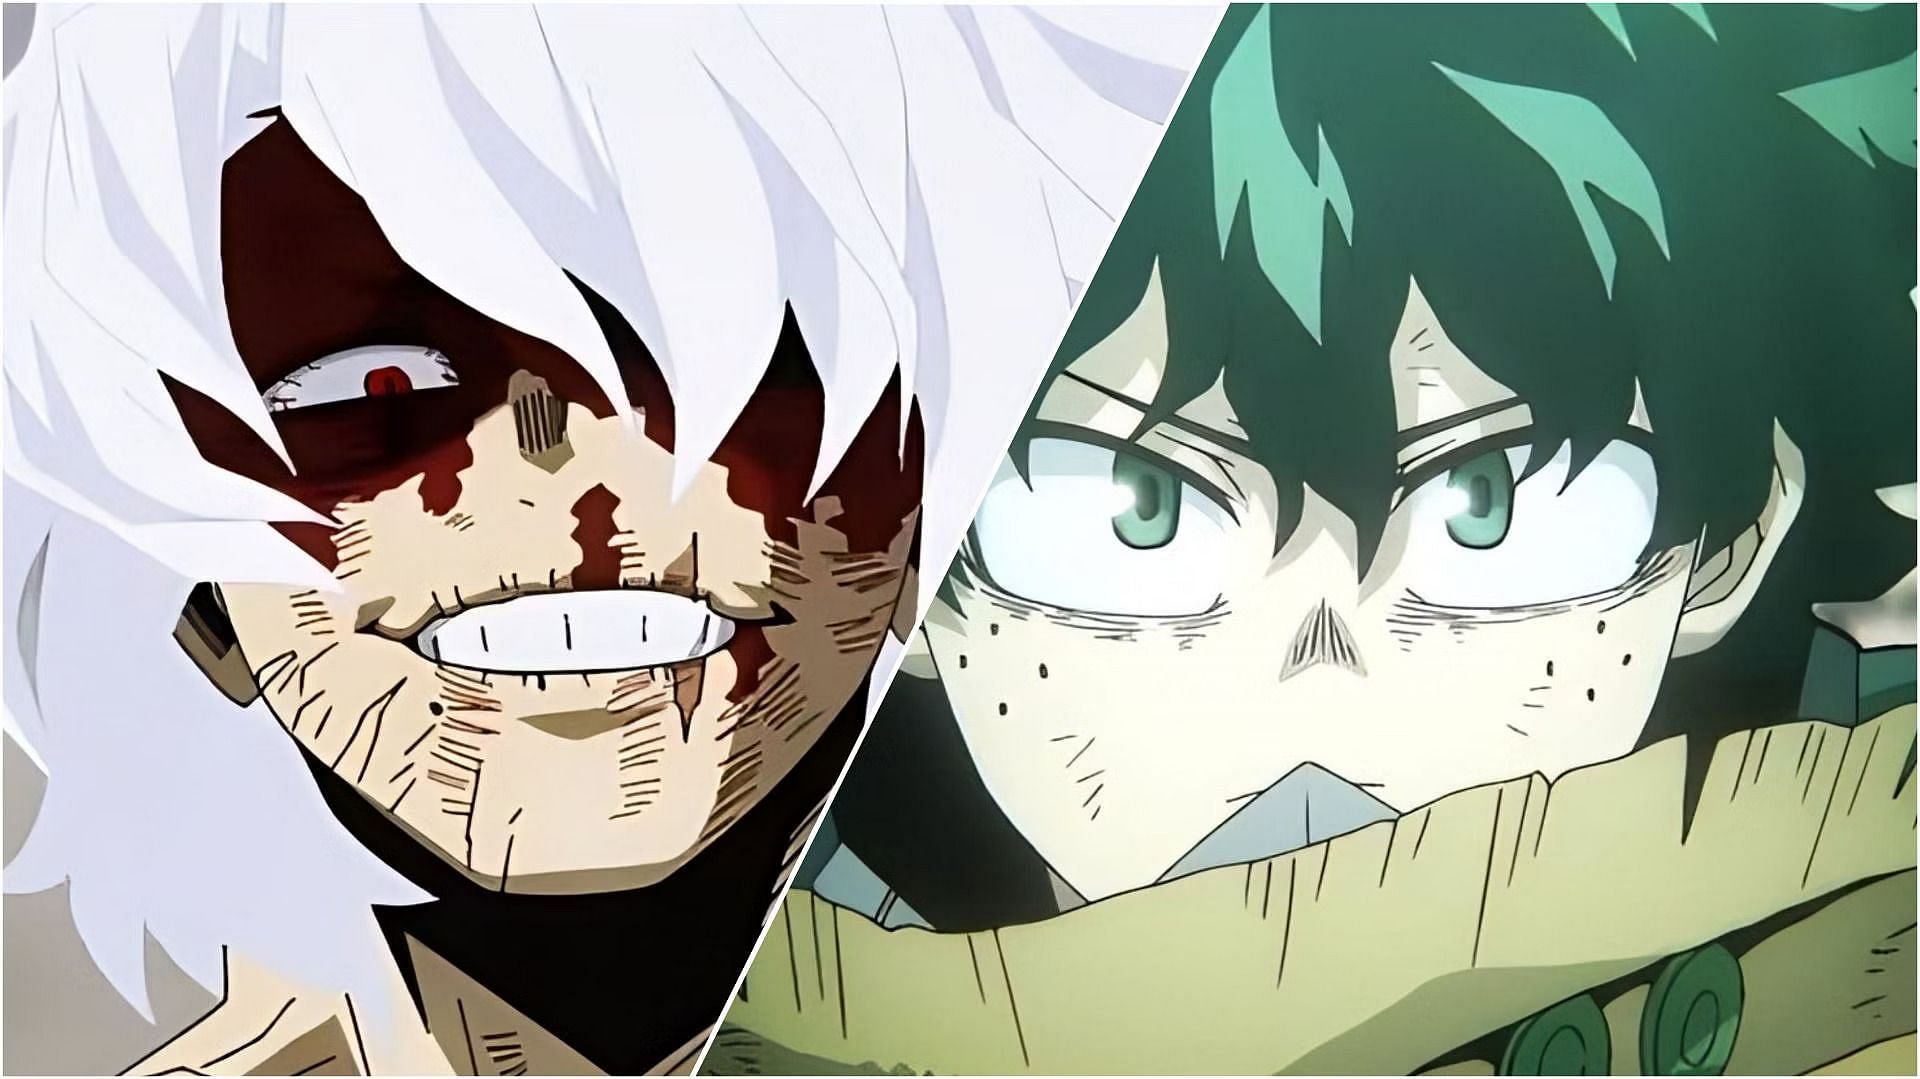 Shigaraki and Deku in the My Hero Academia anime (Image via Bones).